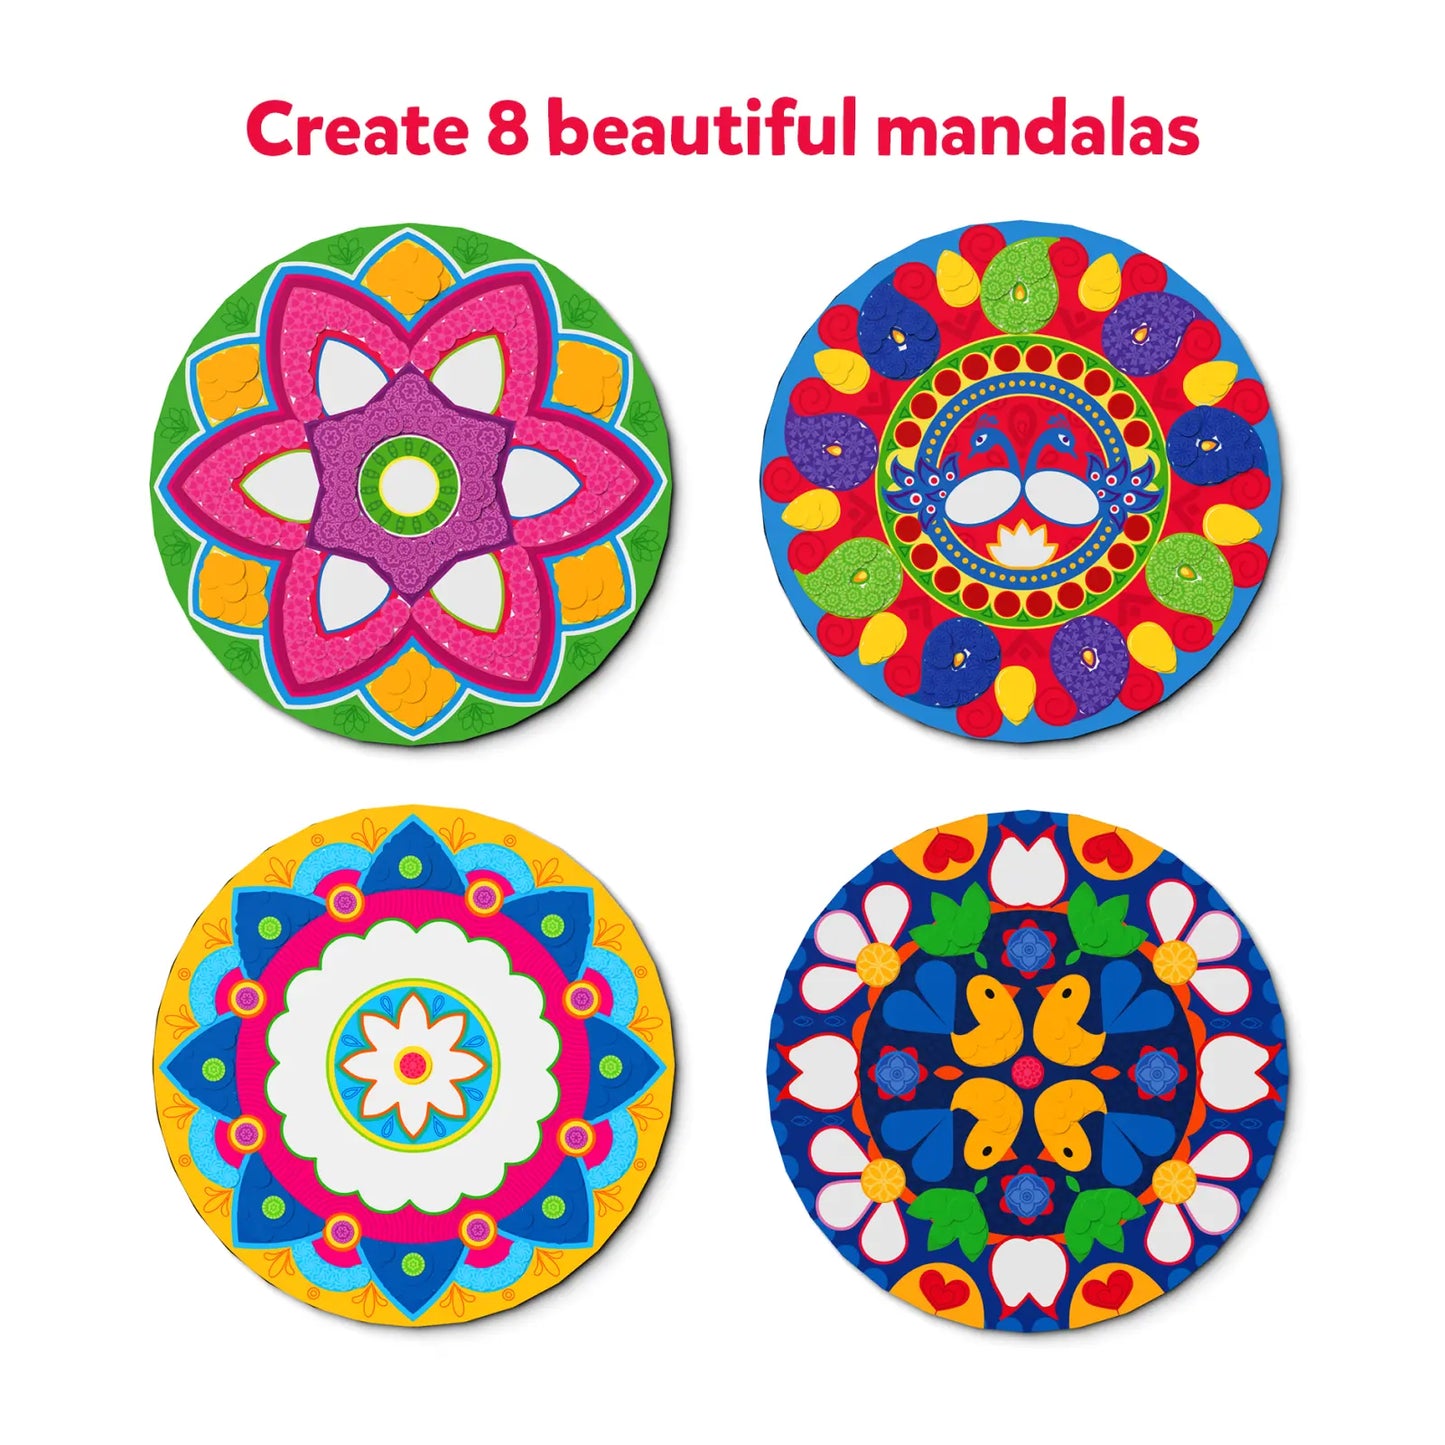 Dot it! Mandala art | No mess sticker art (ages 3-7)